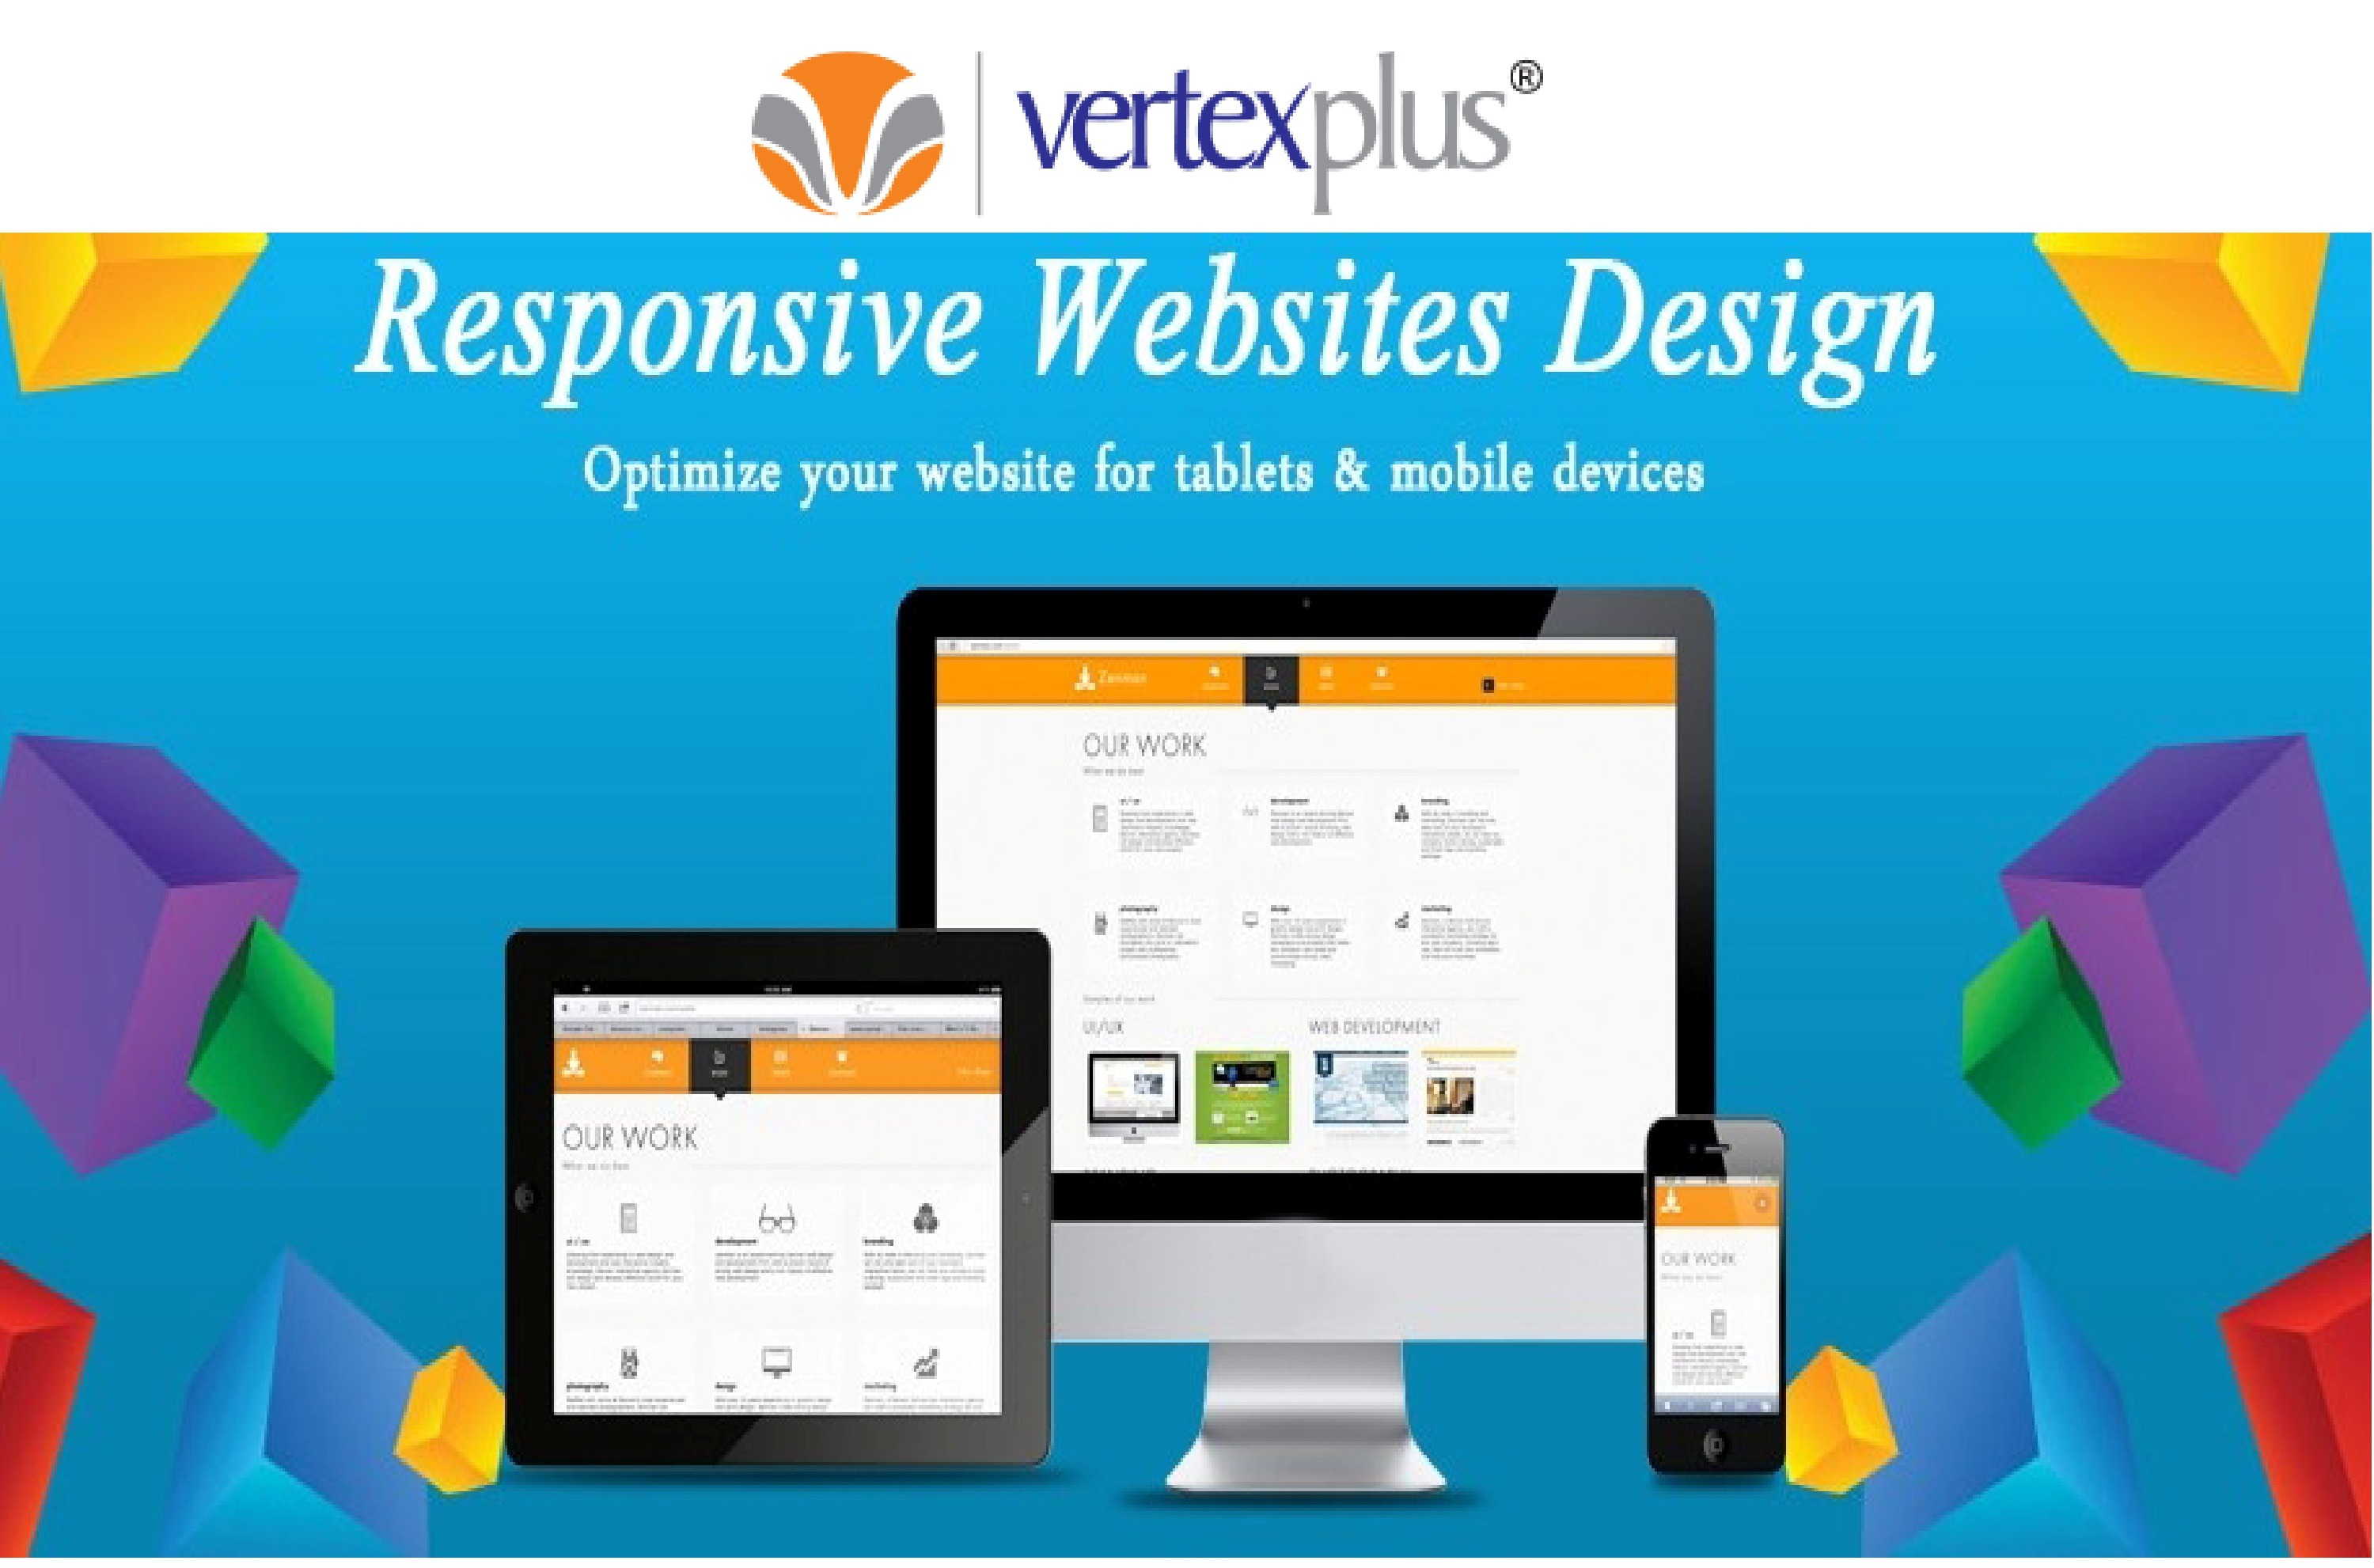 VertexPlus Softwares- Web Design Company India.jpg  by vertexplus